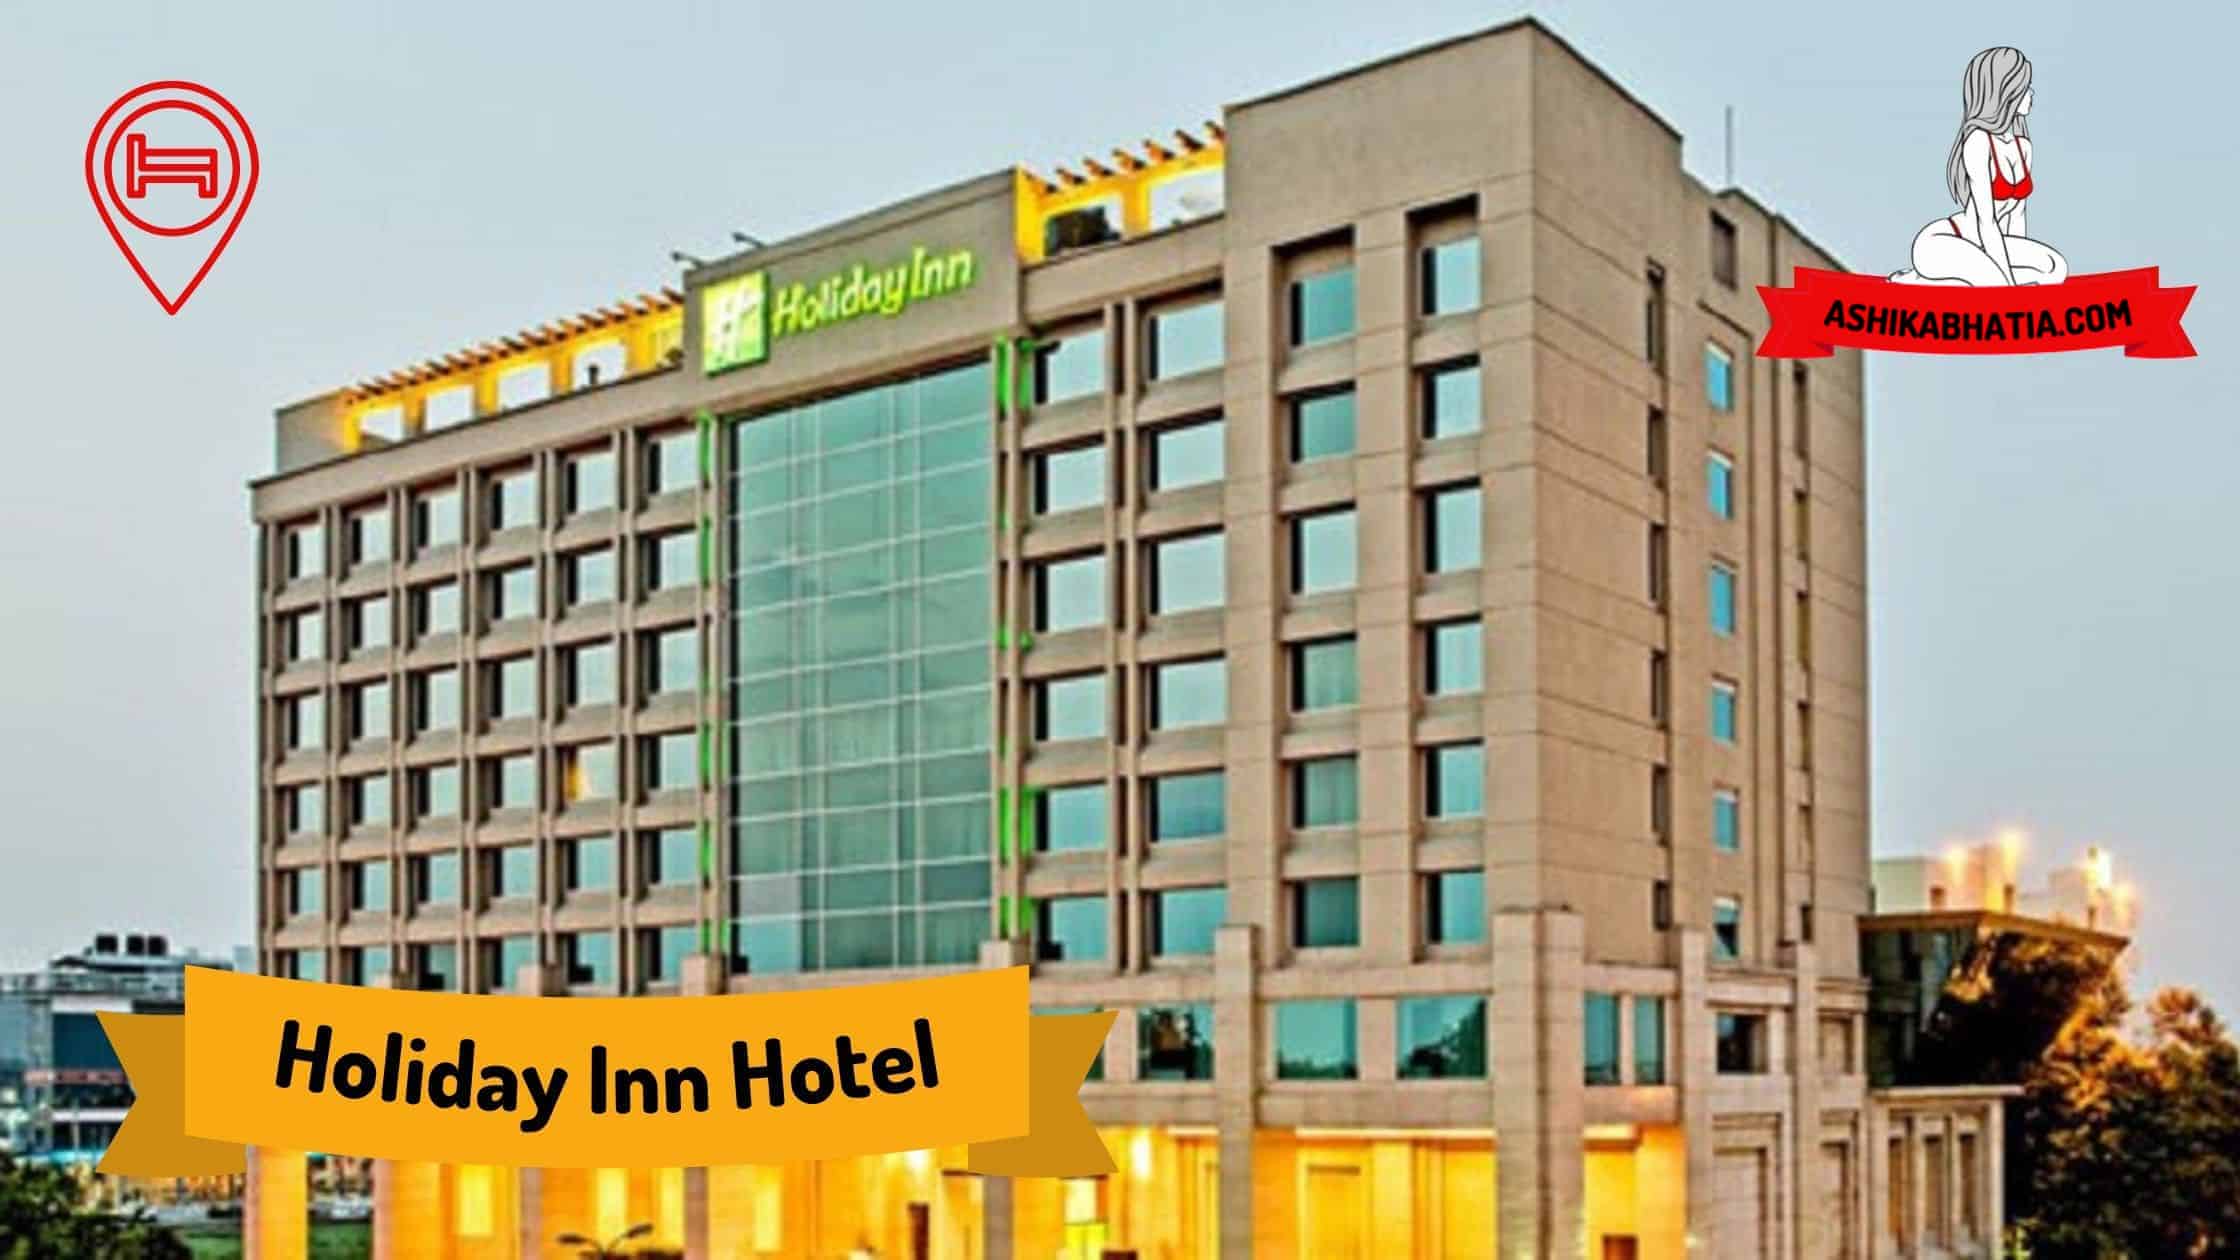 Holiday Inn Hotel Escorts